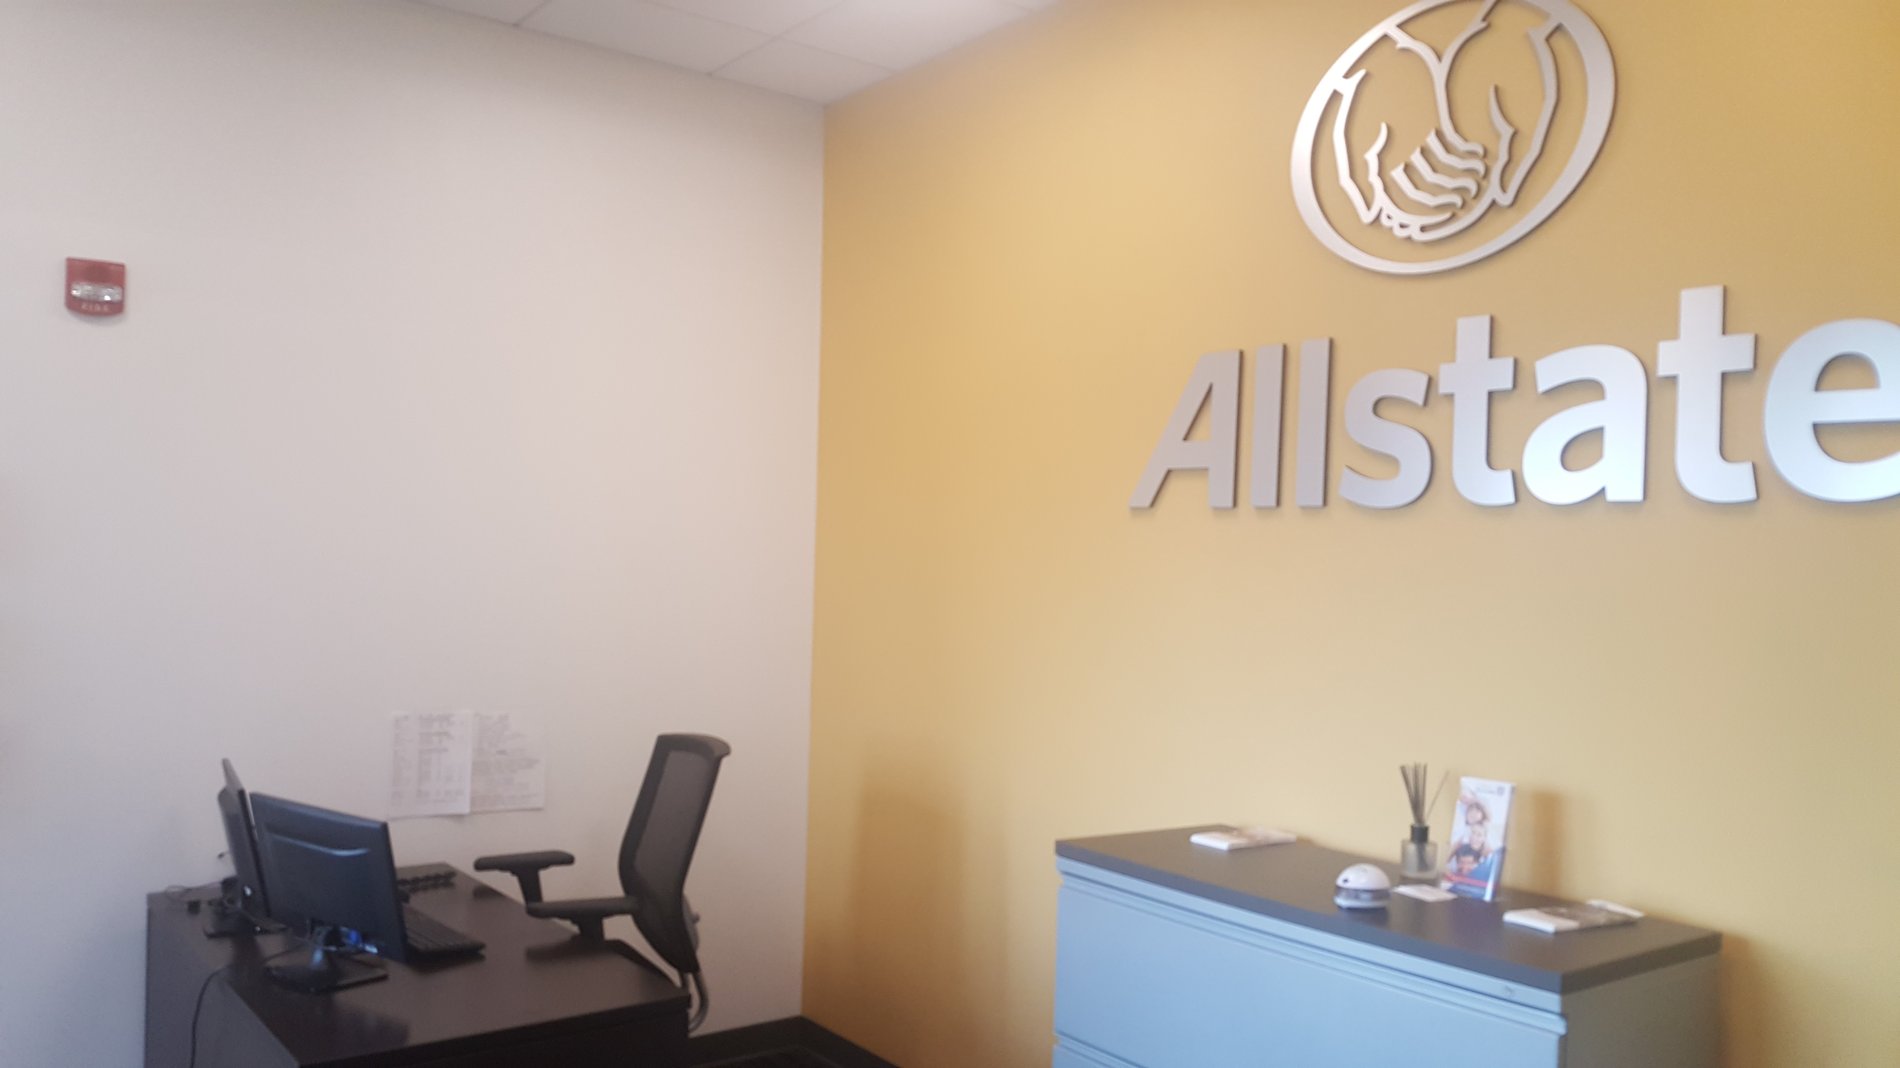 Allstate | Car Insurance in Cincinnati, OH - Wyler Insurance ...